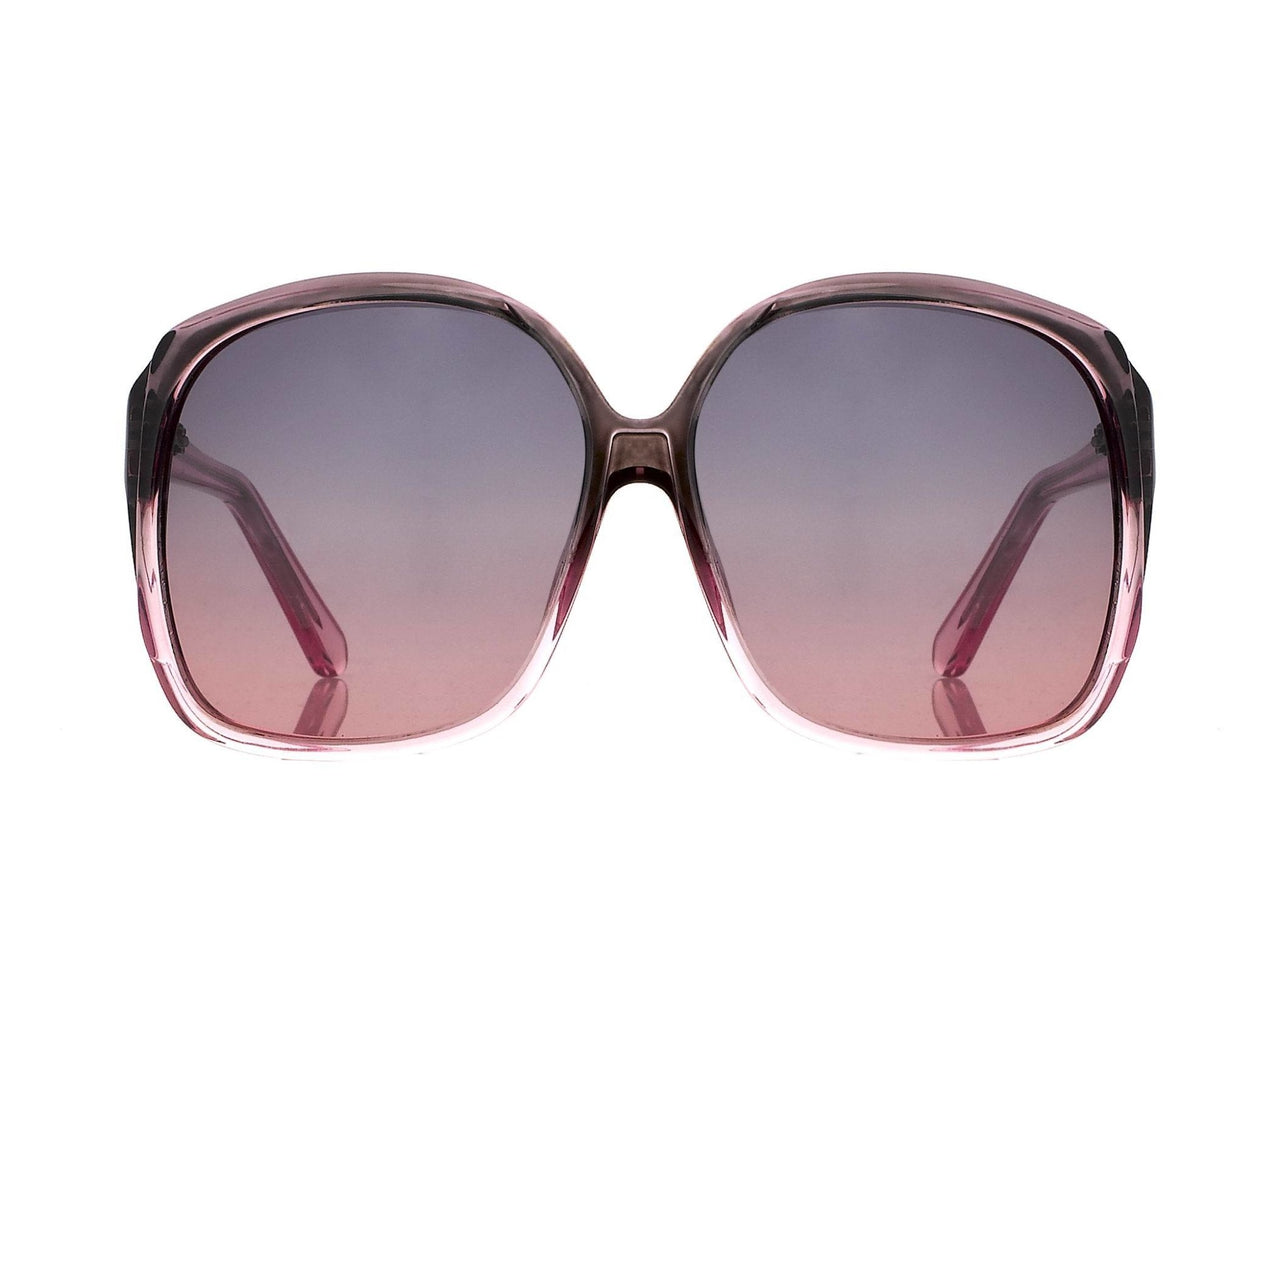 Antonio Berardi Women Sunglasses Oversized Frame Grey/Pink and Grey Graduated Lenses - 9AB2C2PINK - Watches & Crystals